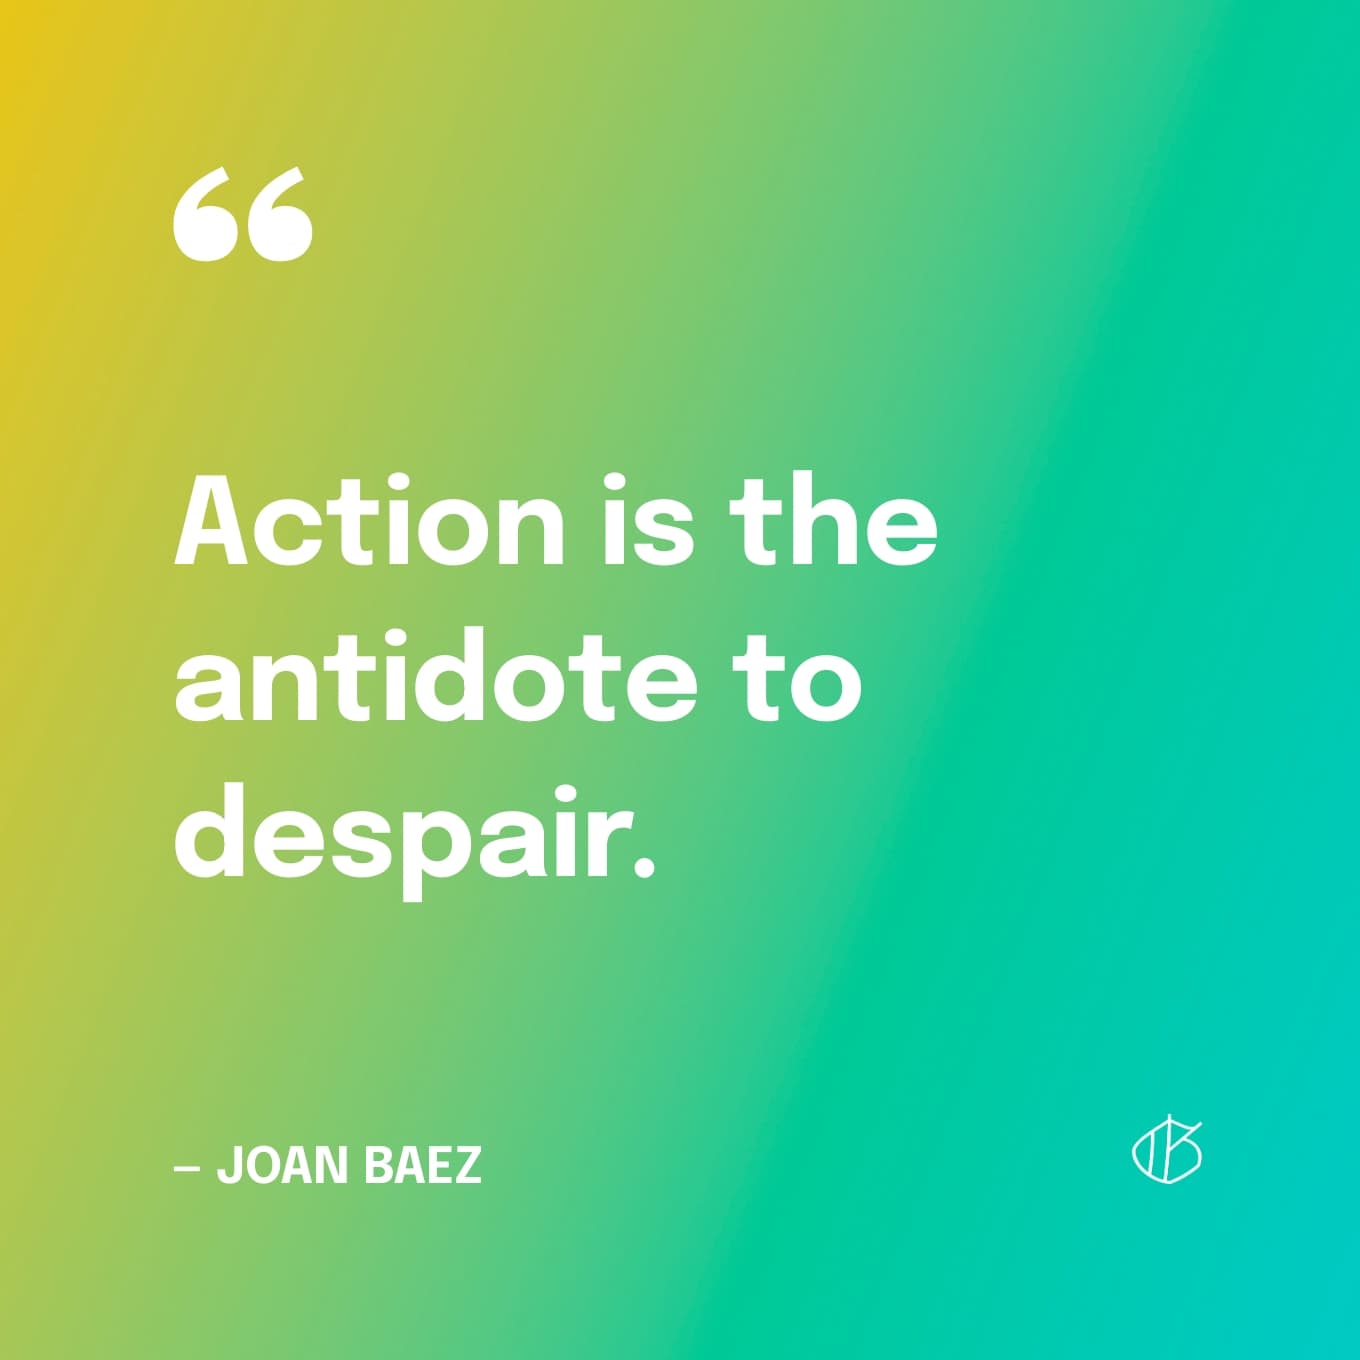 “Action is the antidote to despair.” — Joan Baez